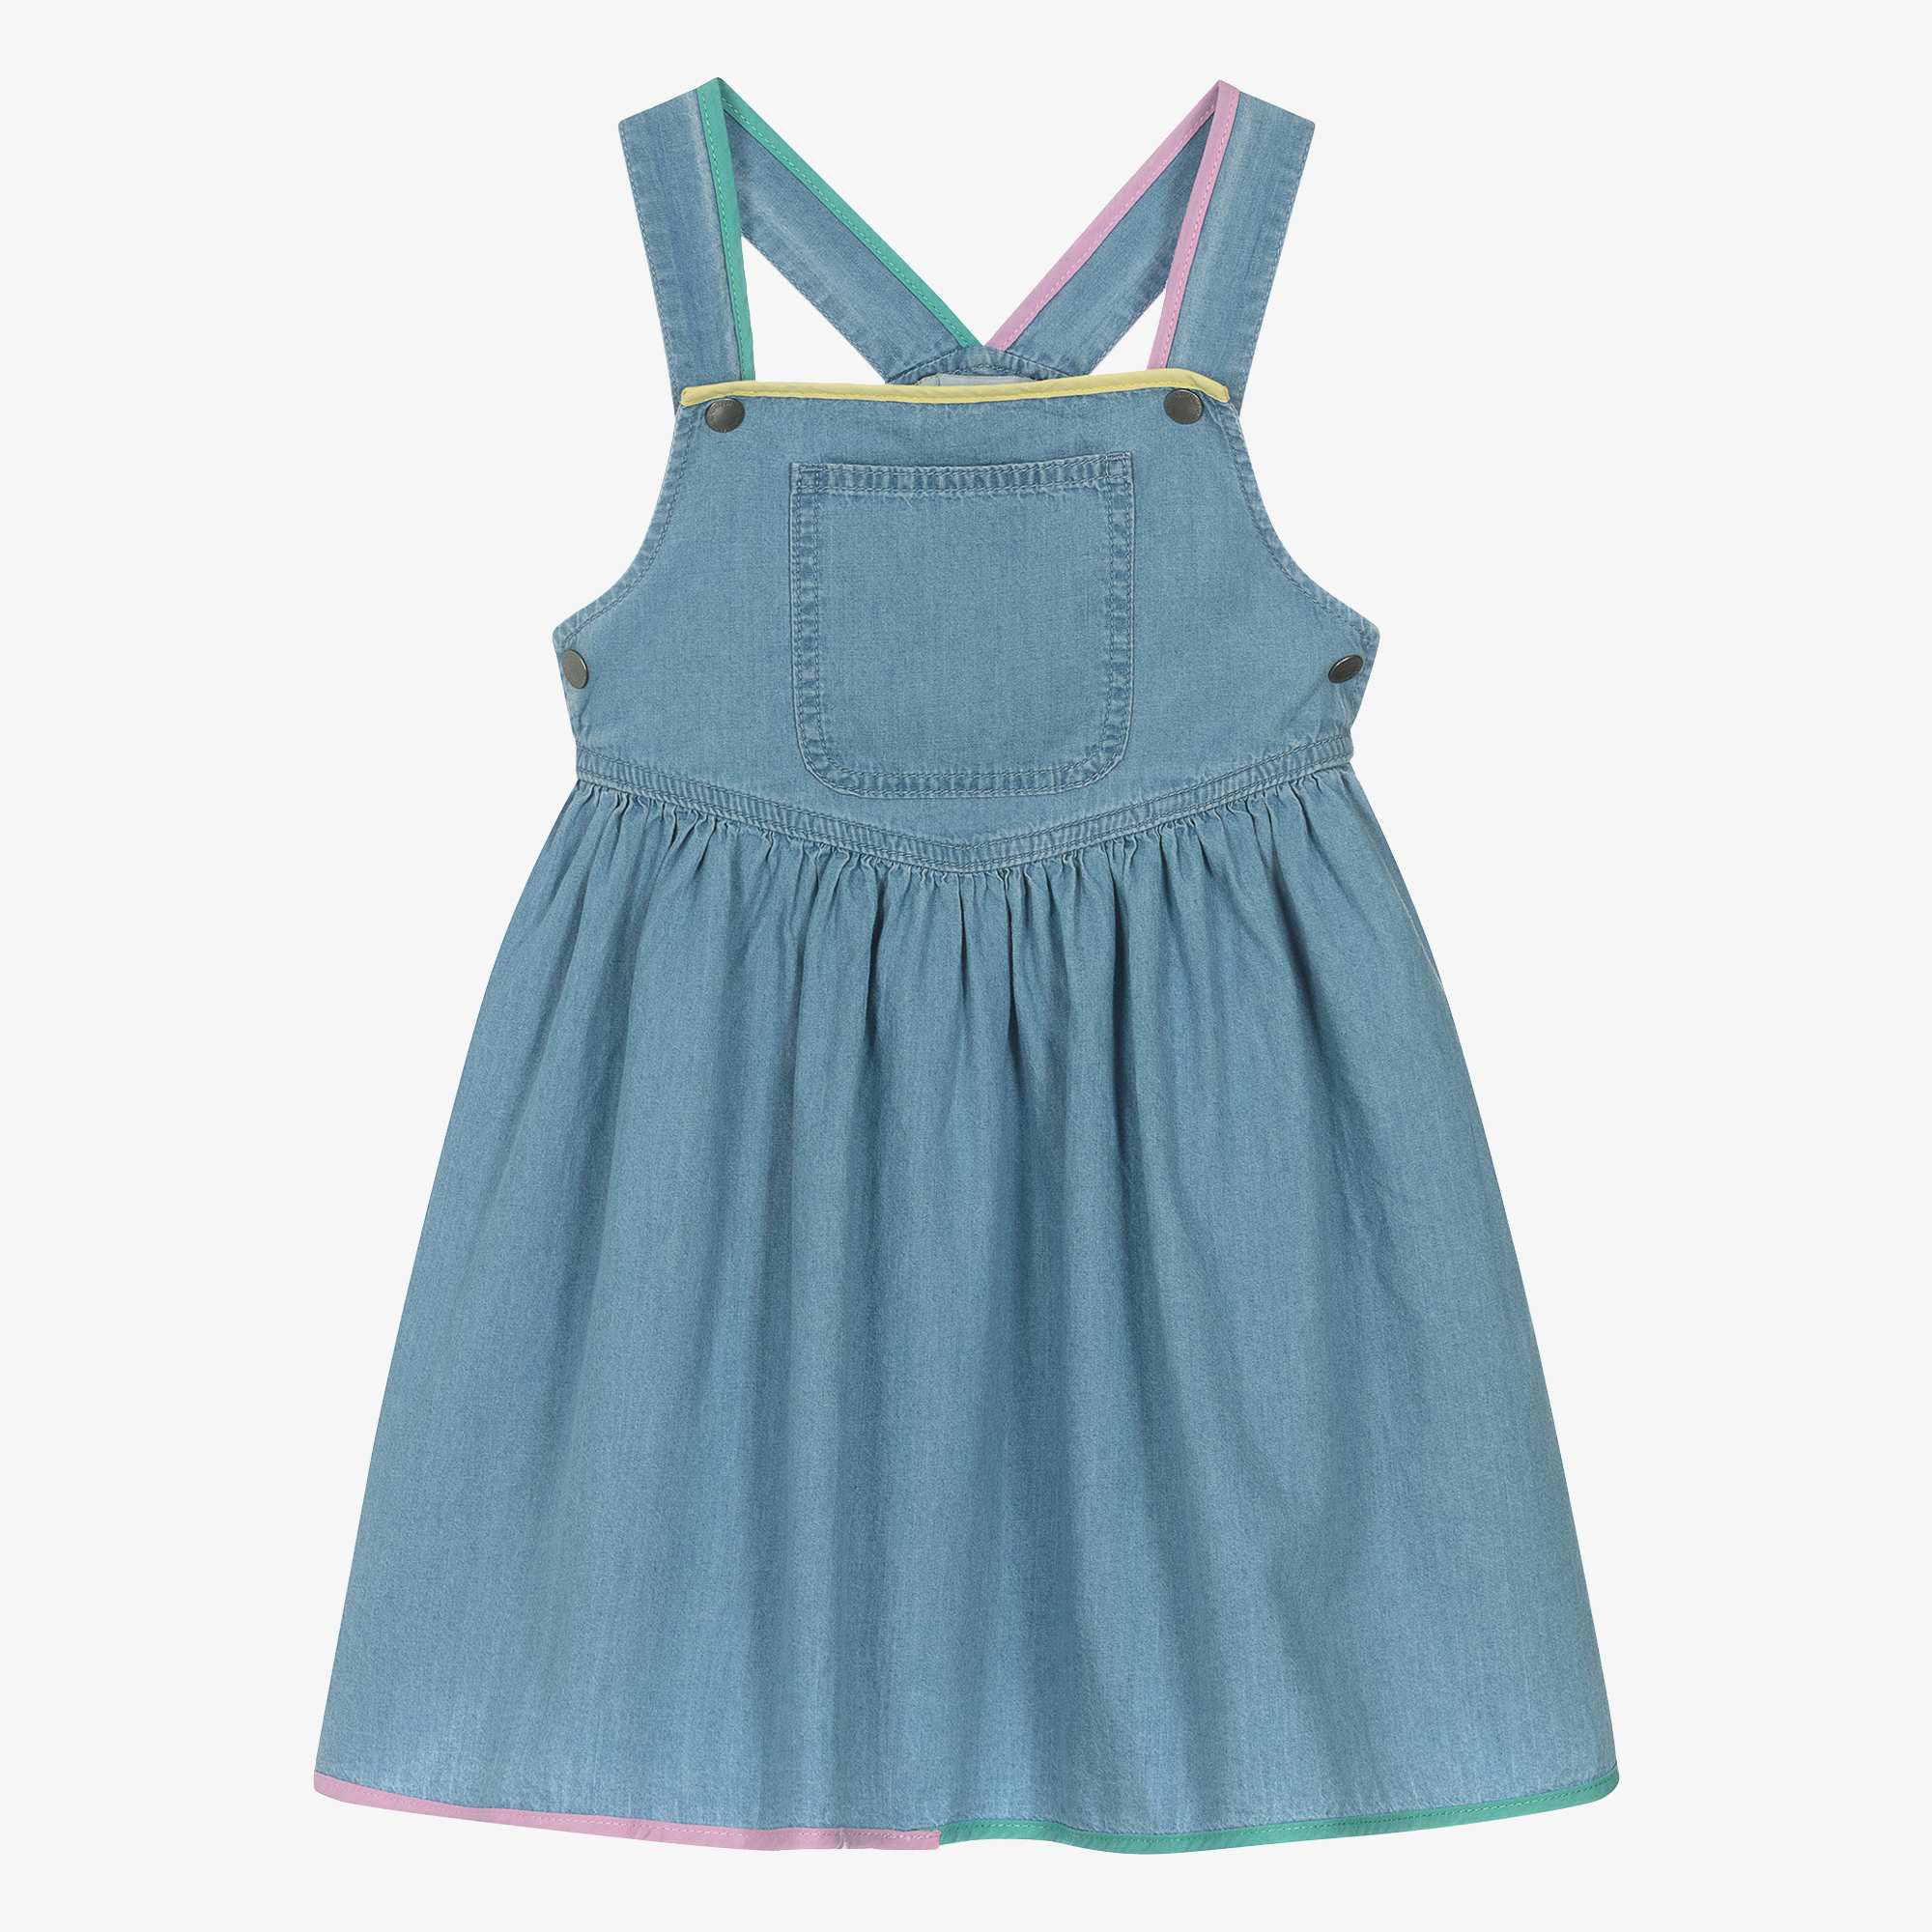 https://cdn.childrensalon.com/media/catalog/product/s/t/stella-mccartney-kids-girls-blue-chambray-dungaree-dress-544006-867924cce1d0383f5a9925877f15dabdc3e844f5.jpg